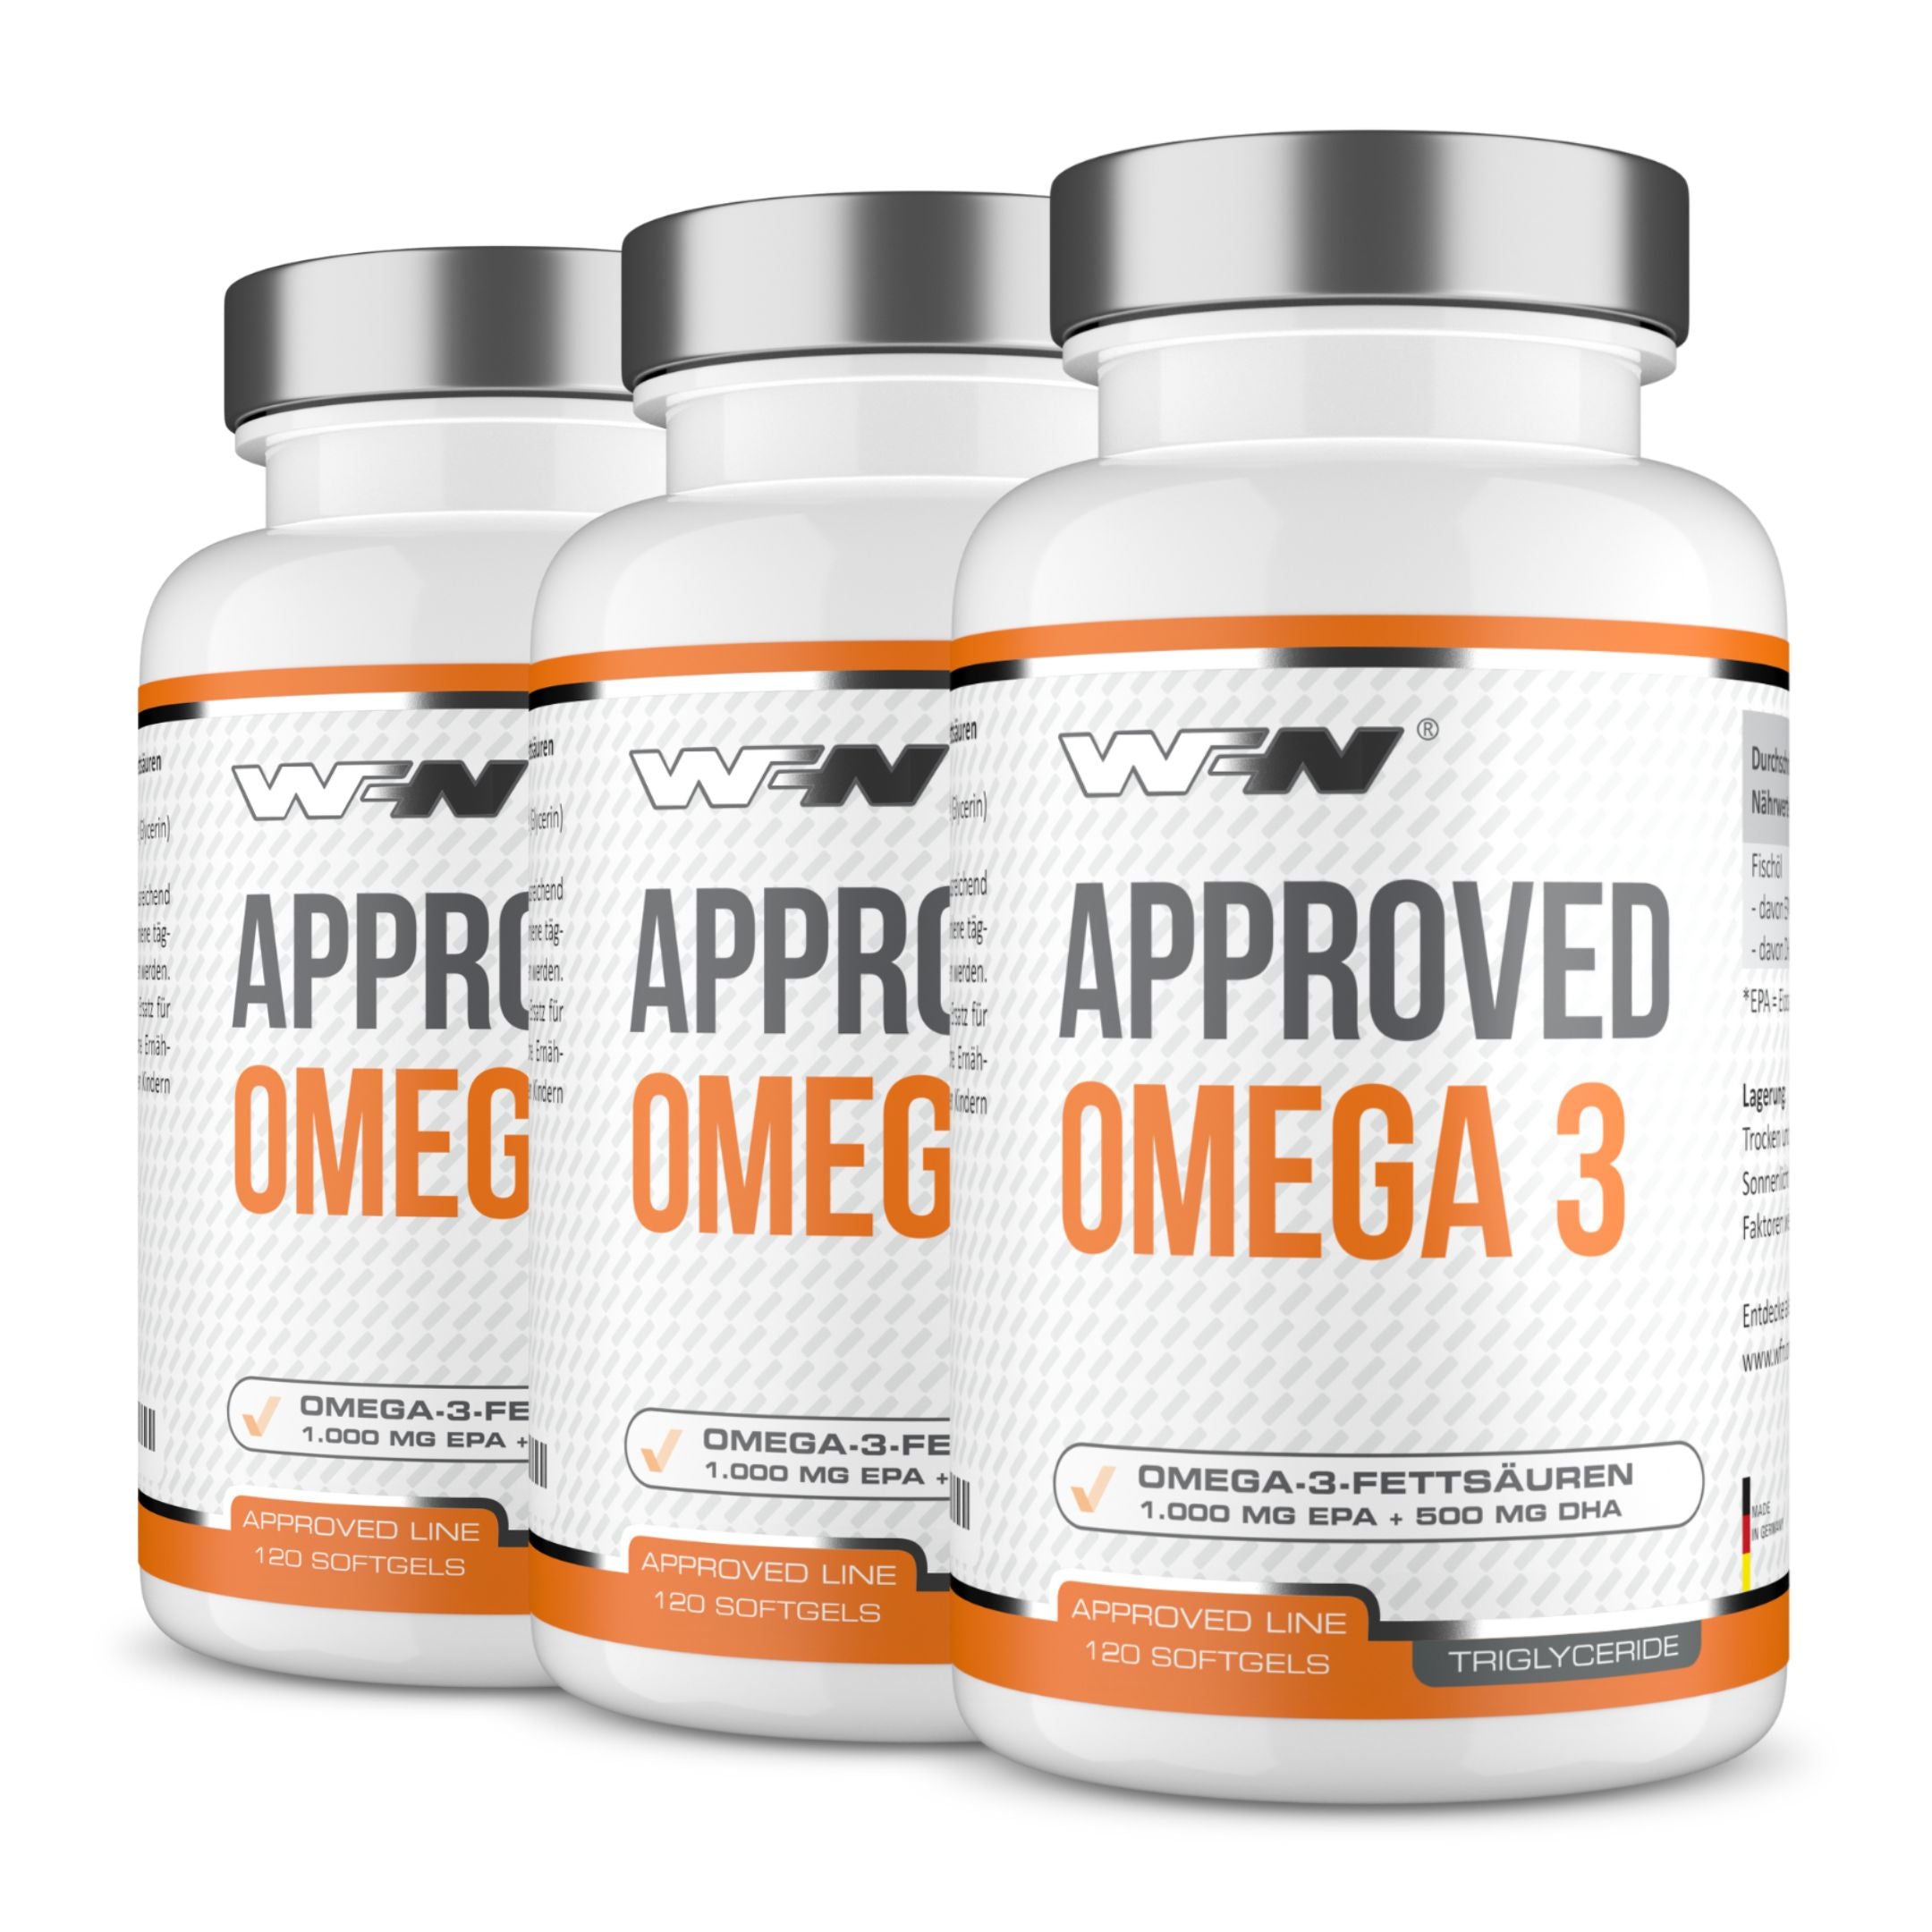 Approved Omega 3